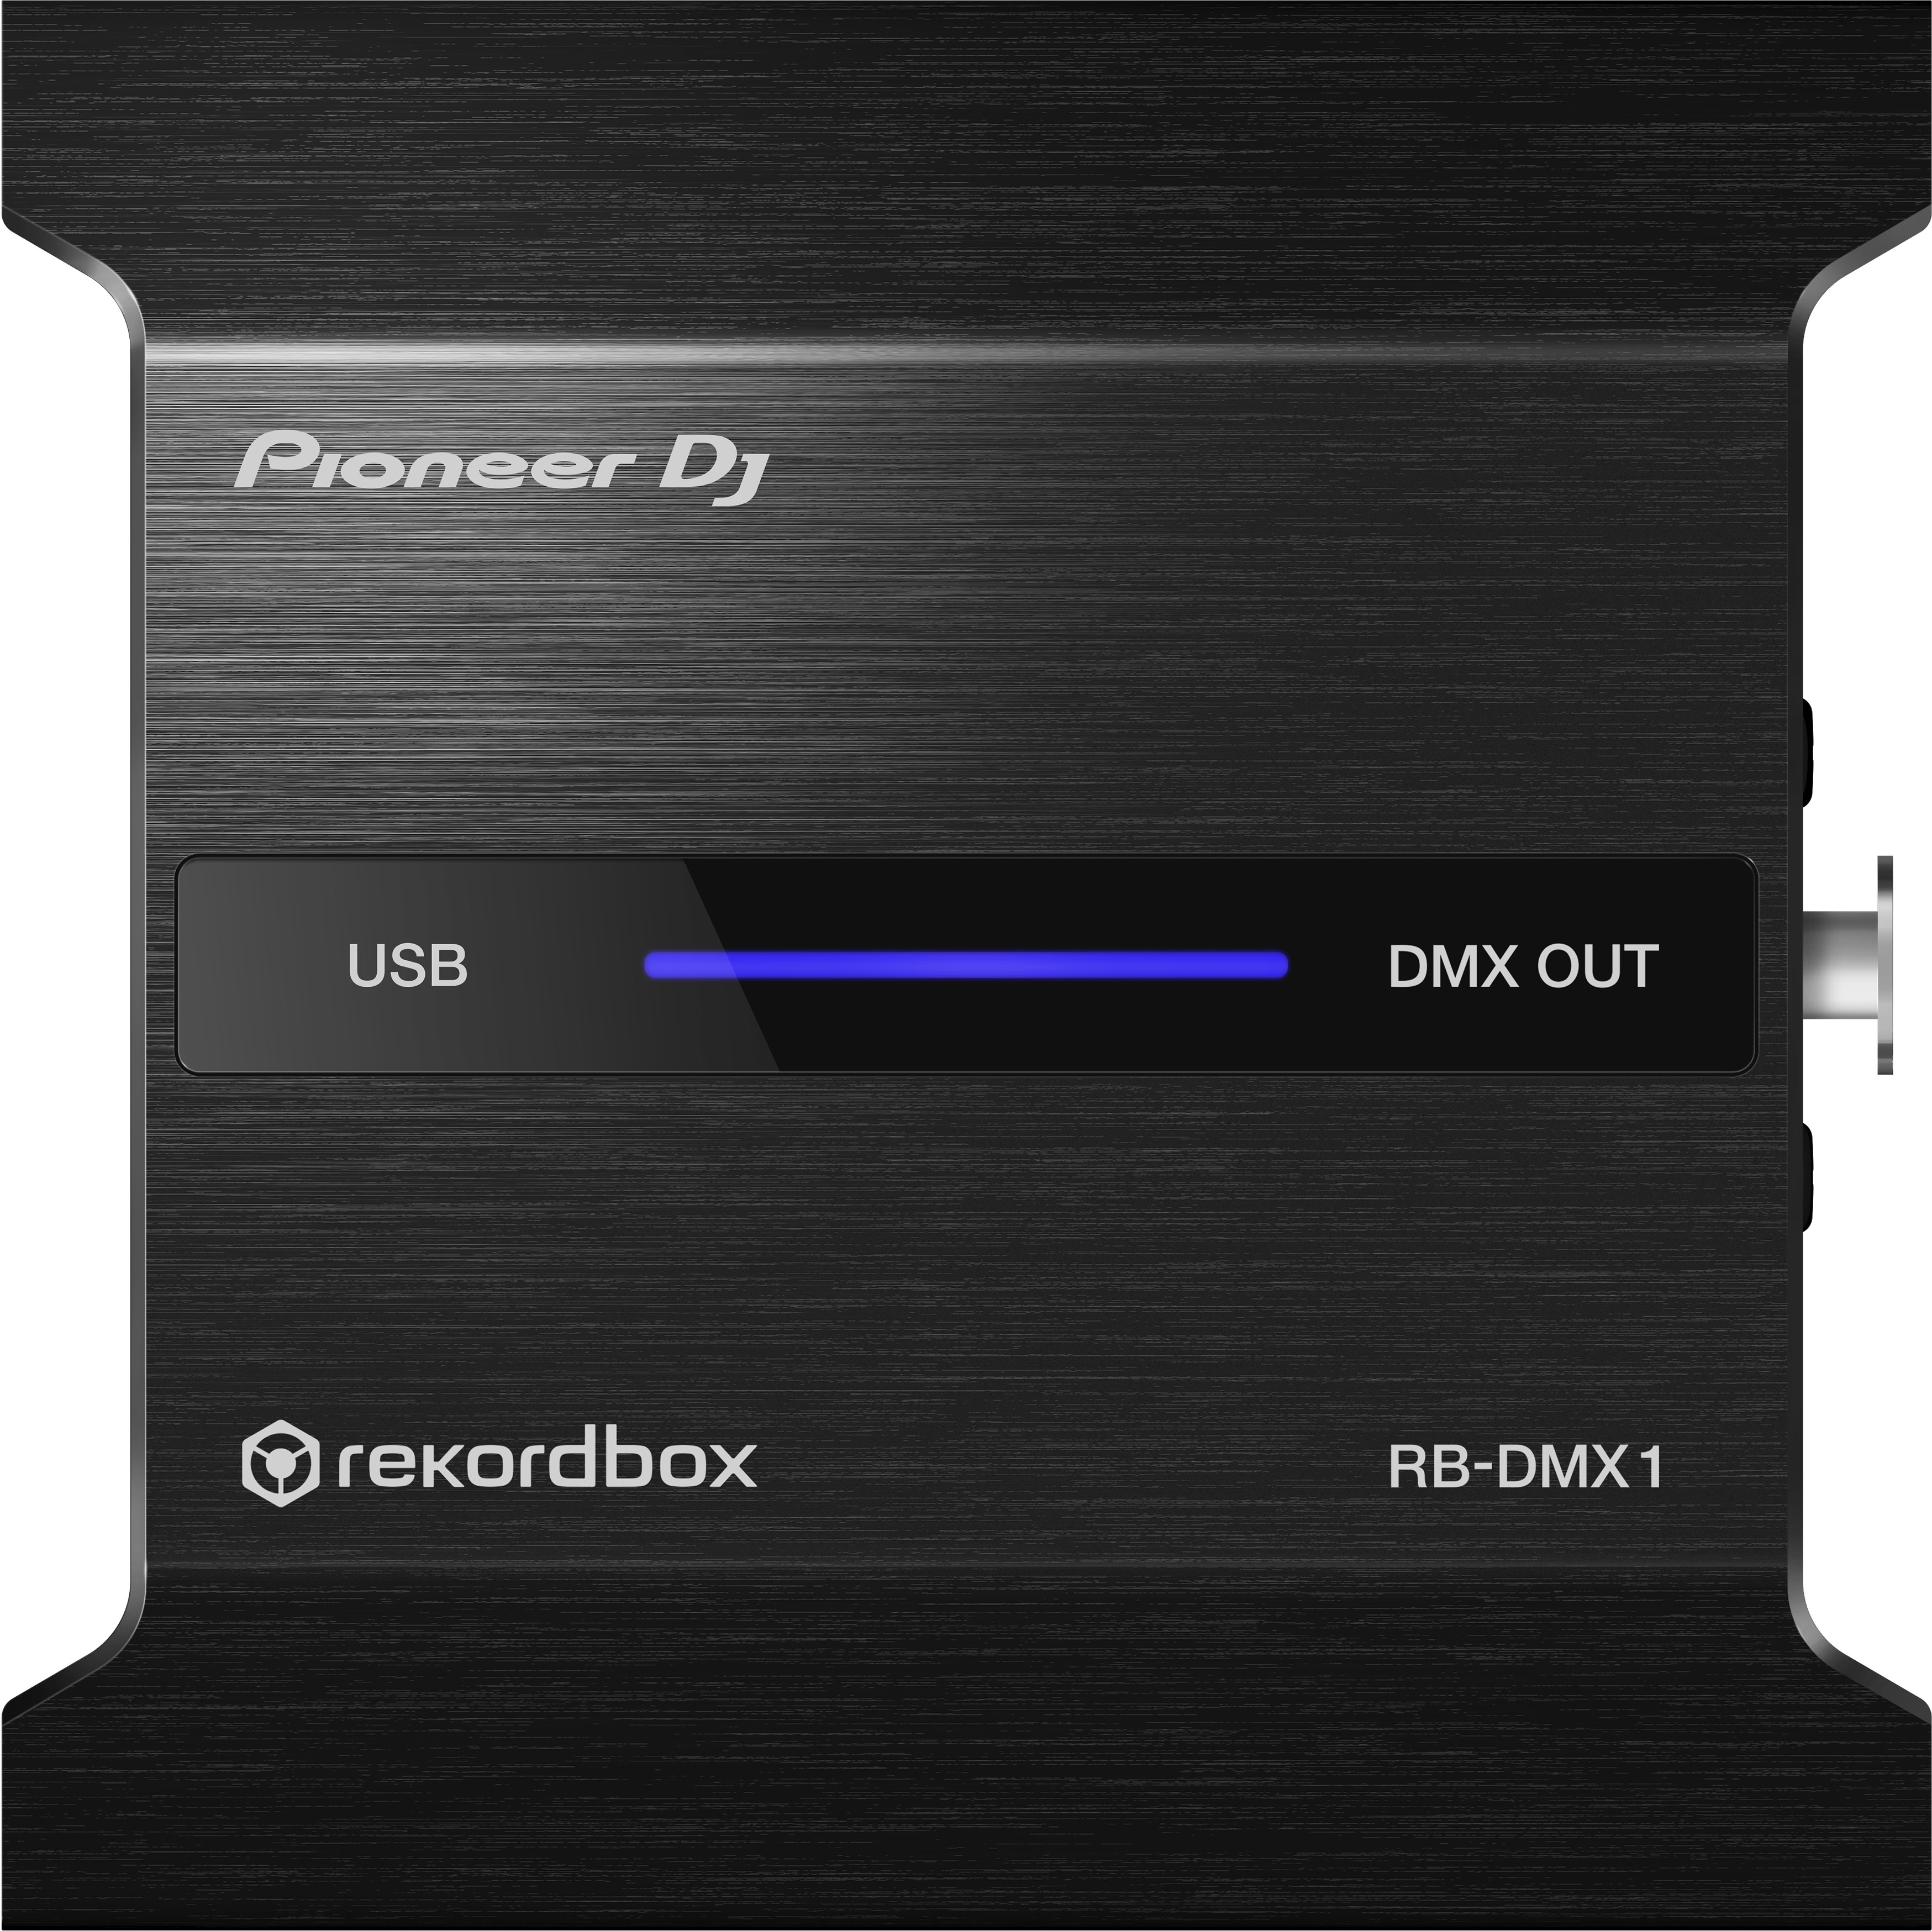 Pioneer Dj Rb-dmx1 - DMX controller - Variation 1